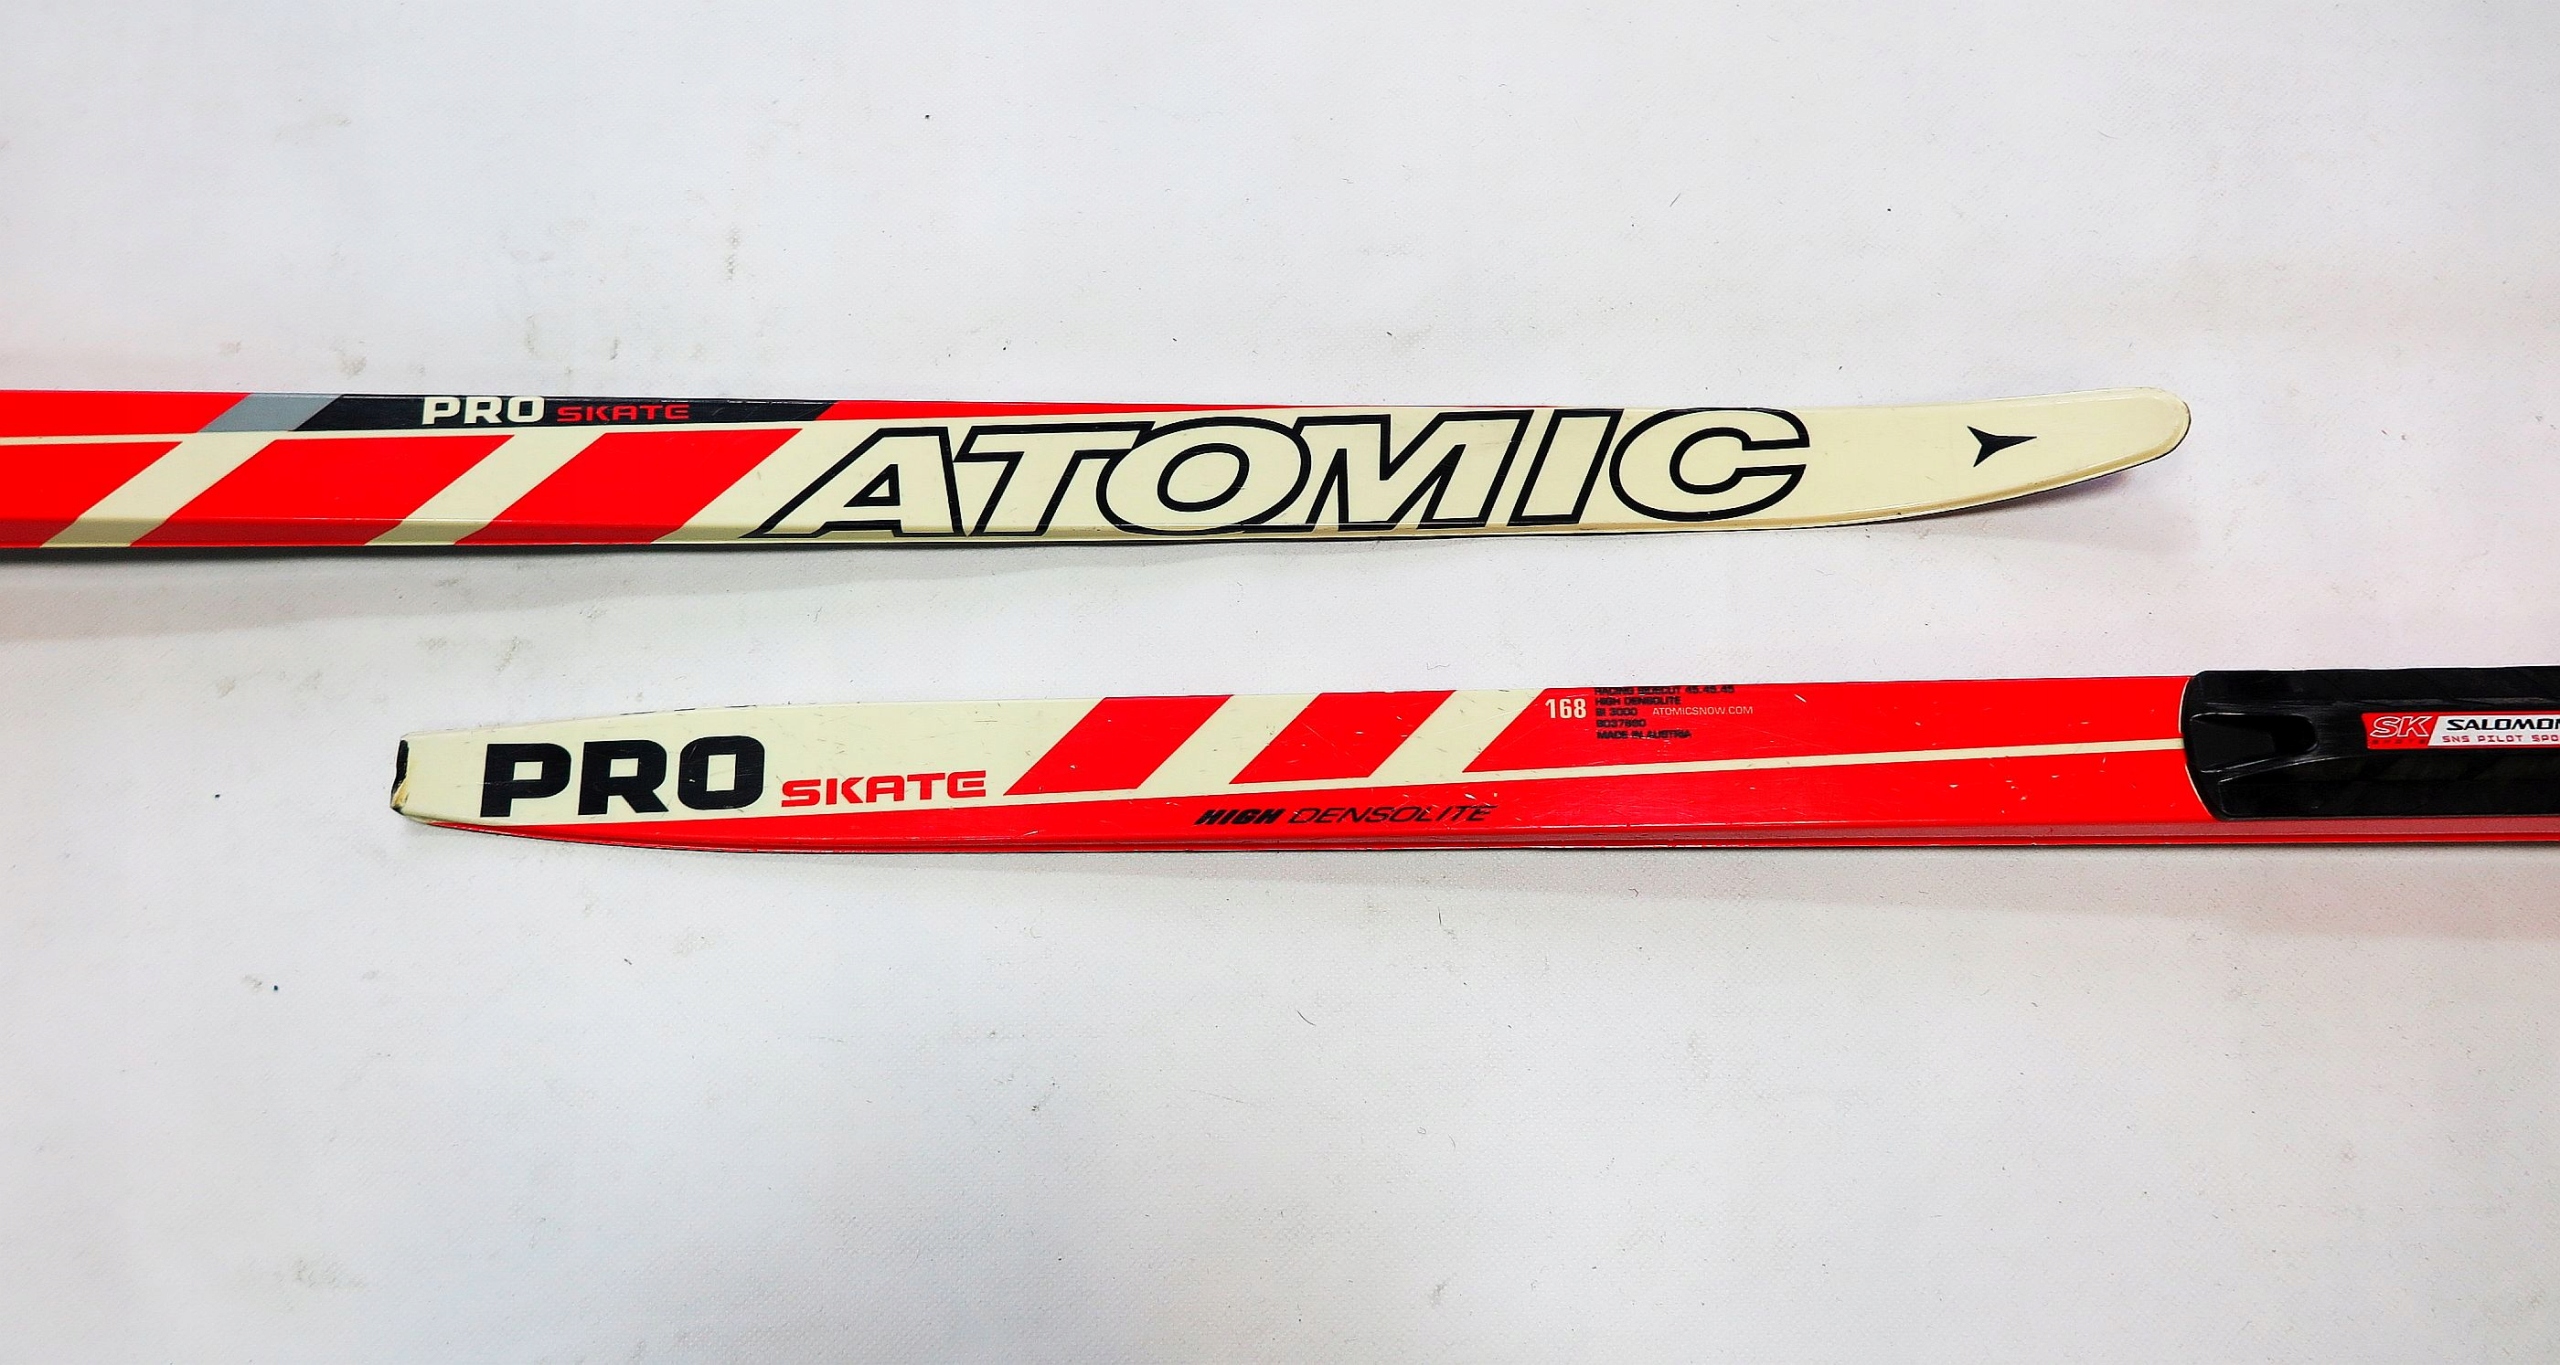 Atomic pro skate. Беговые лыжи Atomic Pro Skate. Atomic Pro Skate лыжи 2004. Atomic Pro Skate 2014. Atomic Densolite беговые лыжи.